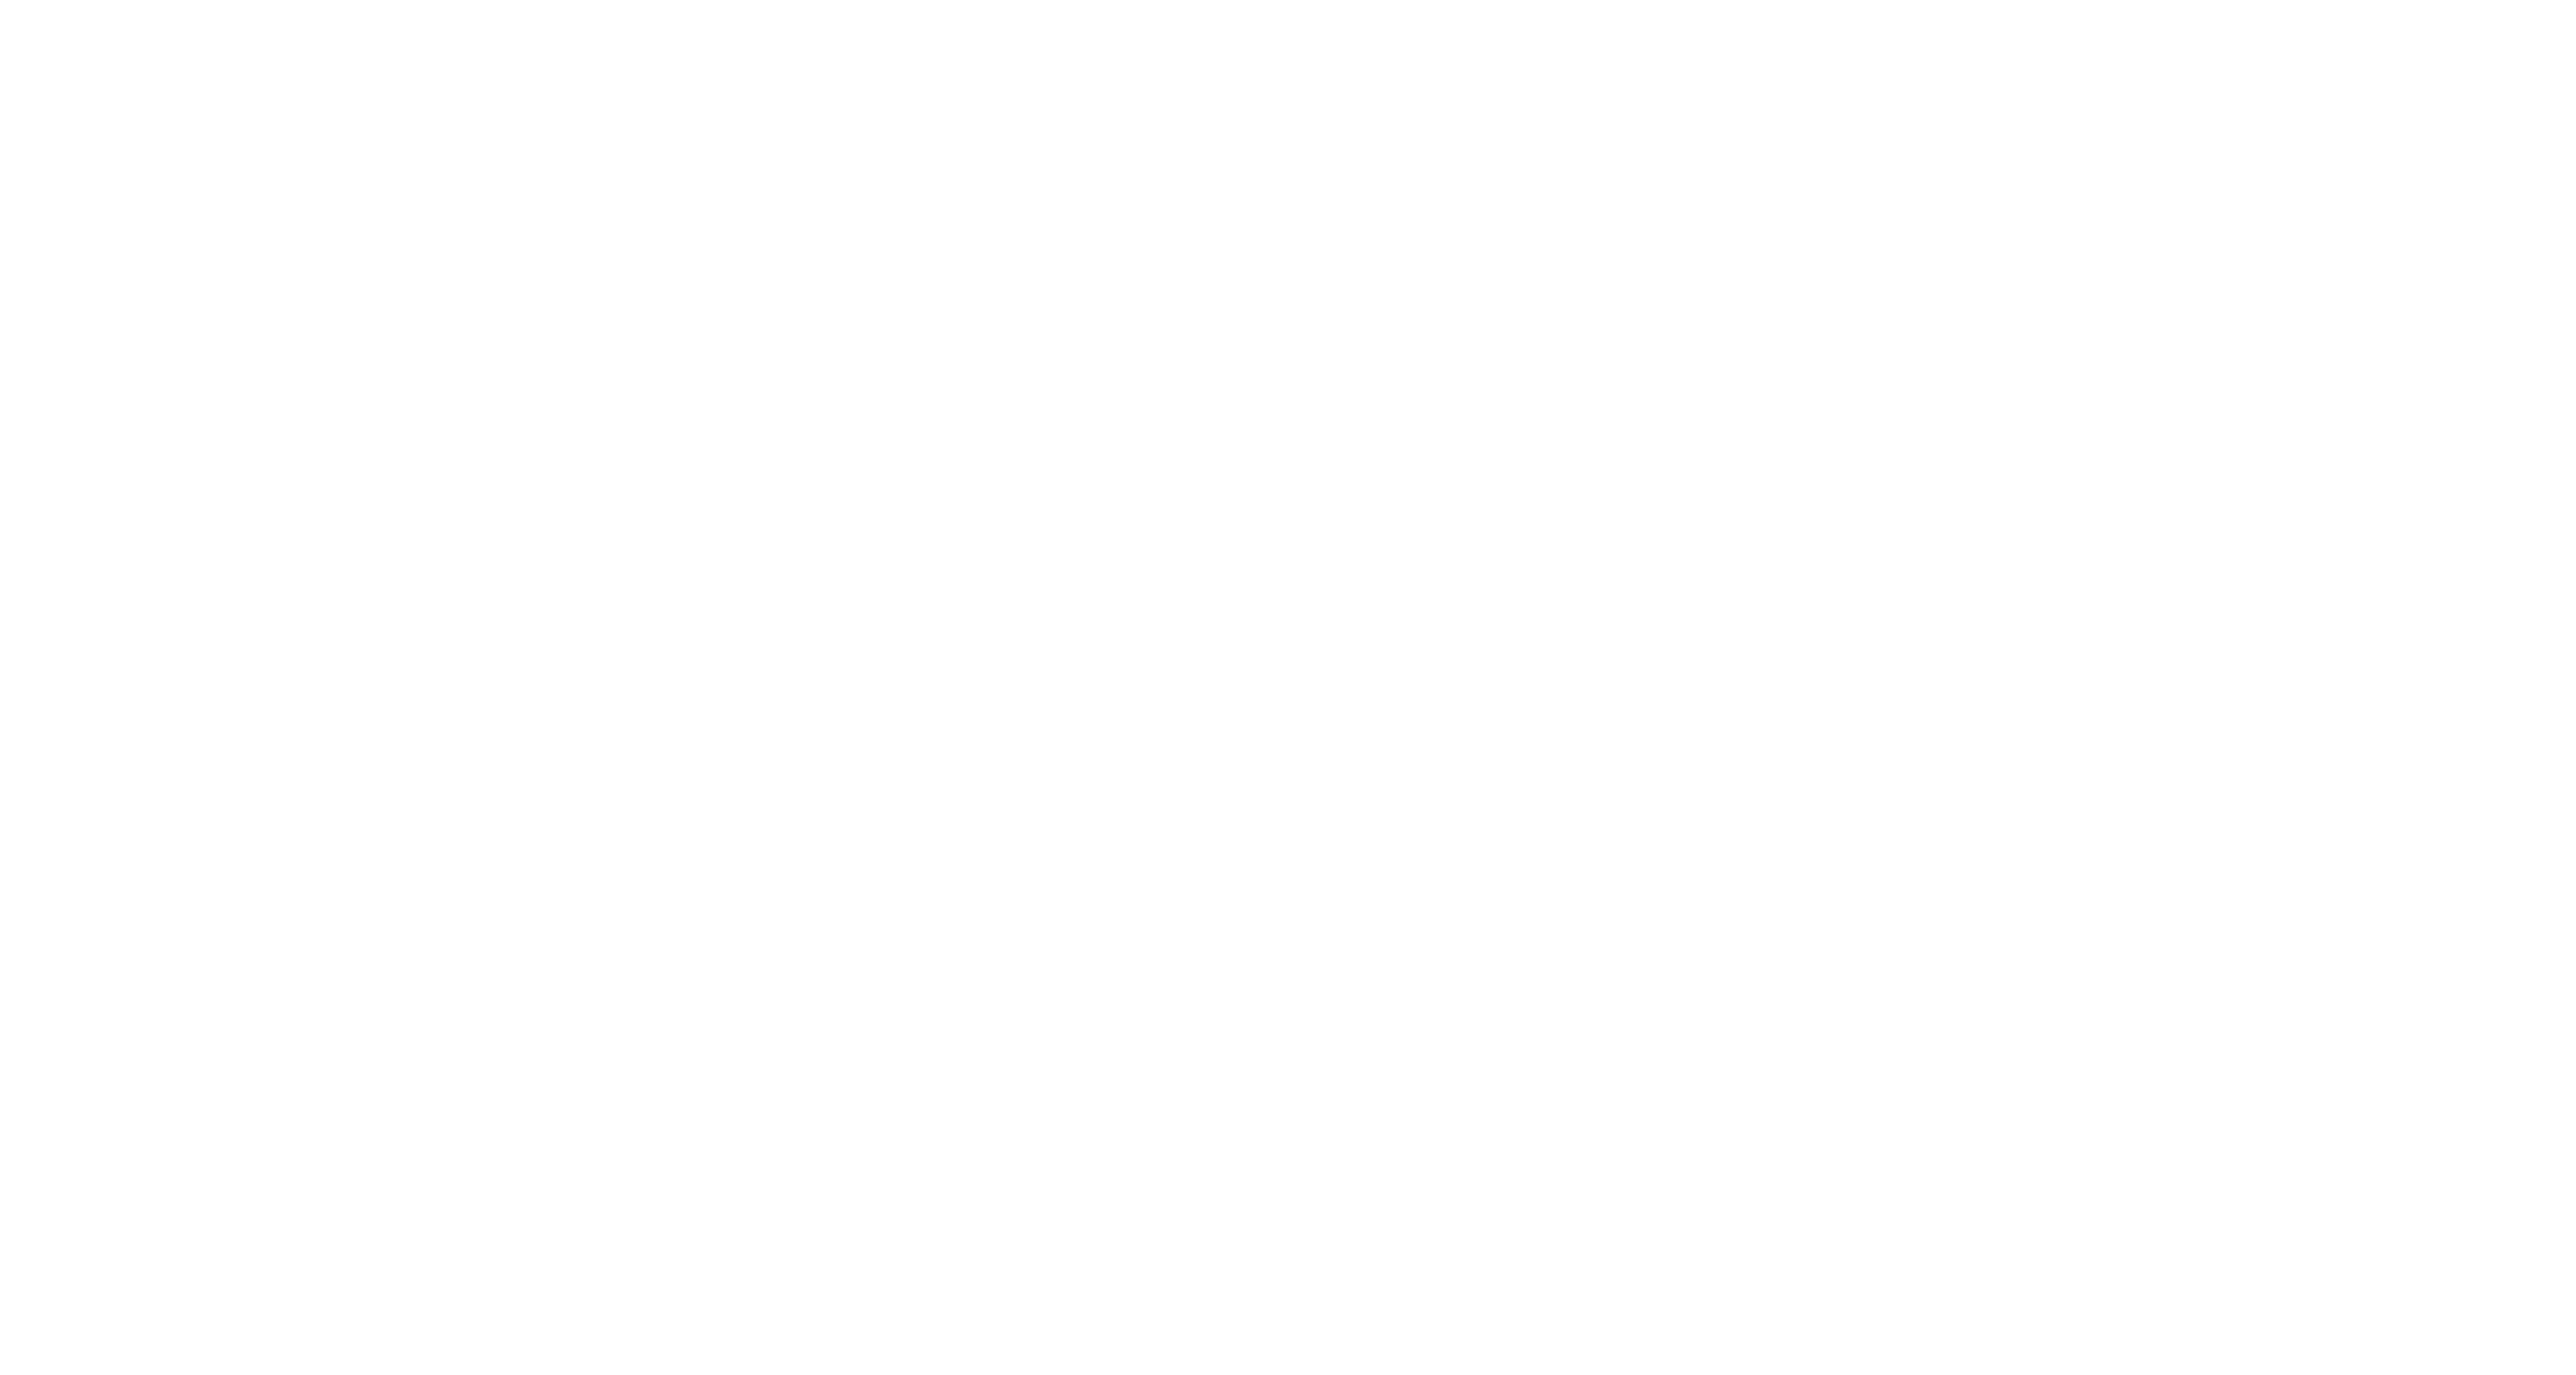 Corkboard logo full white